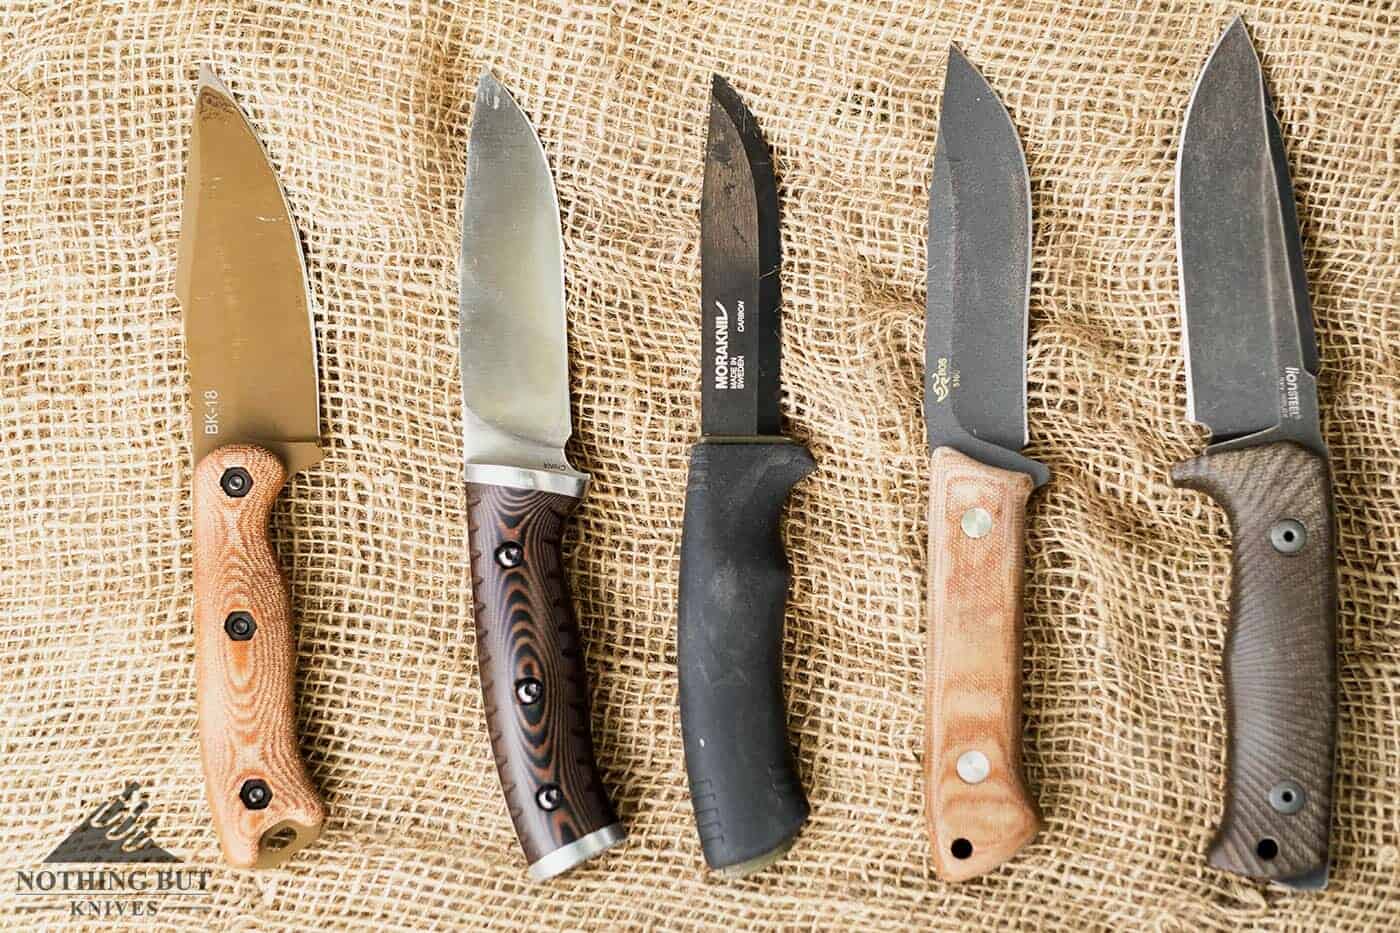 Five different survival bushcraft knives on a burlap background.